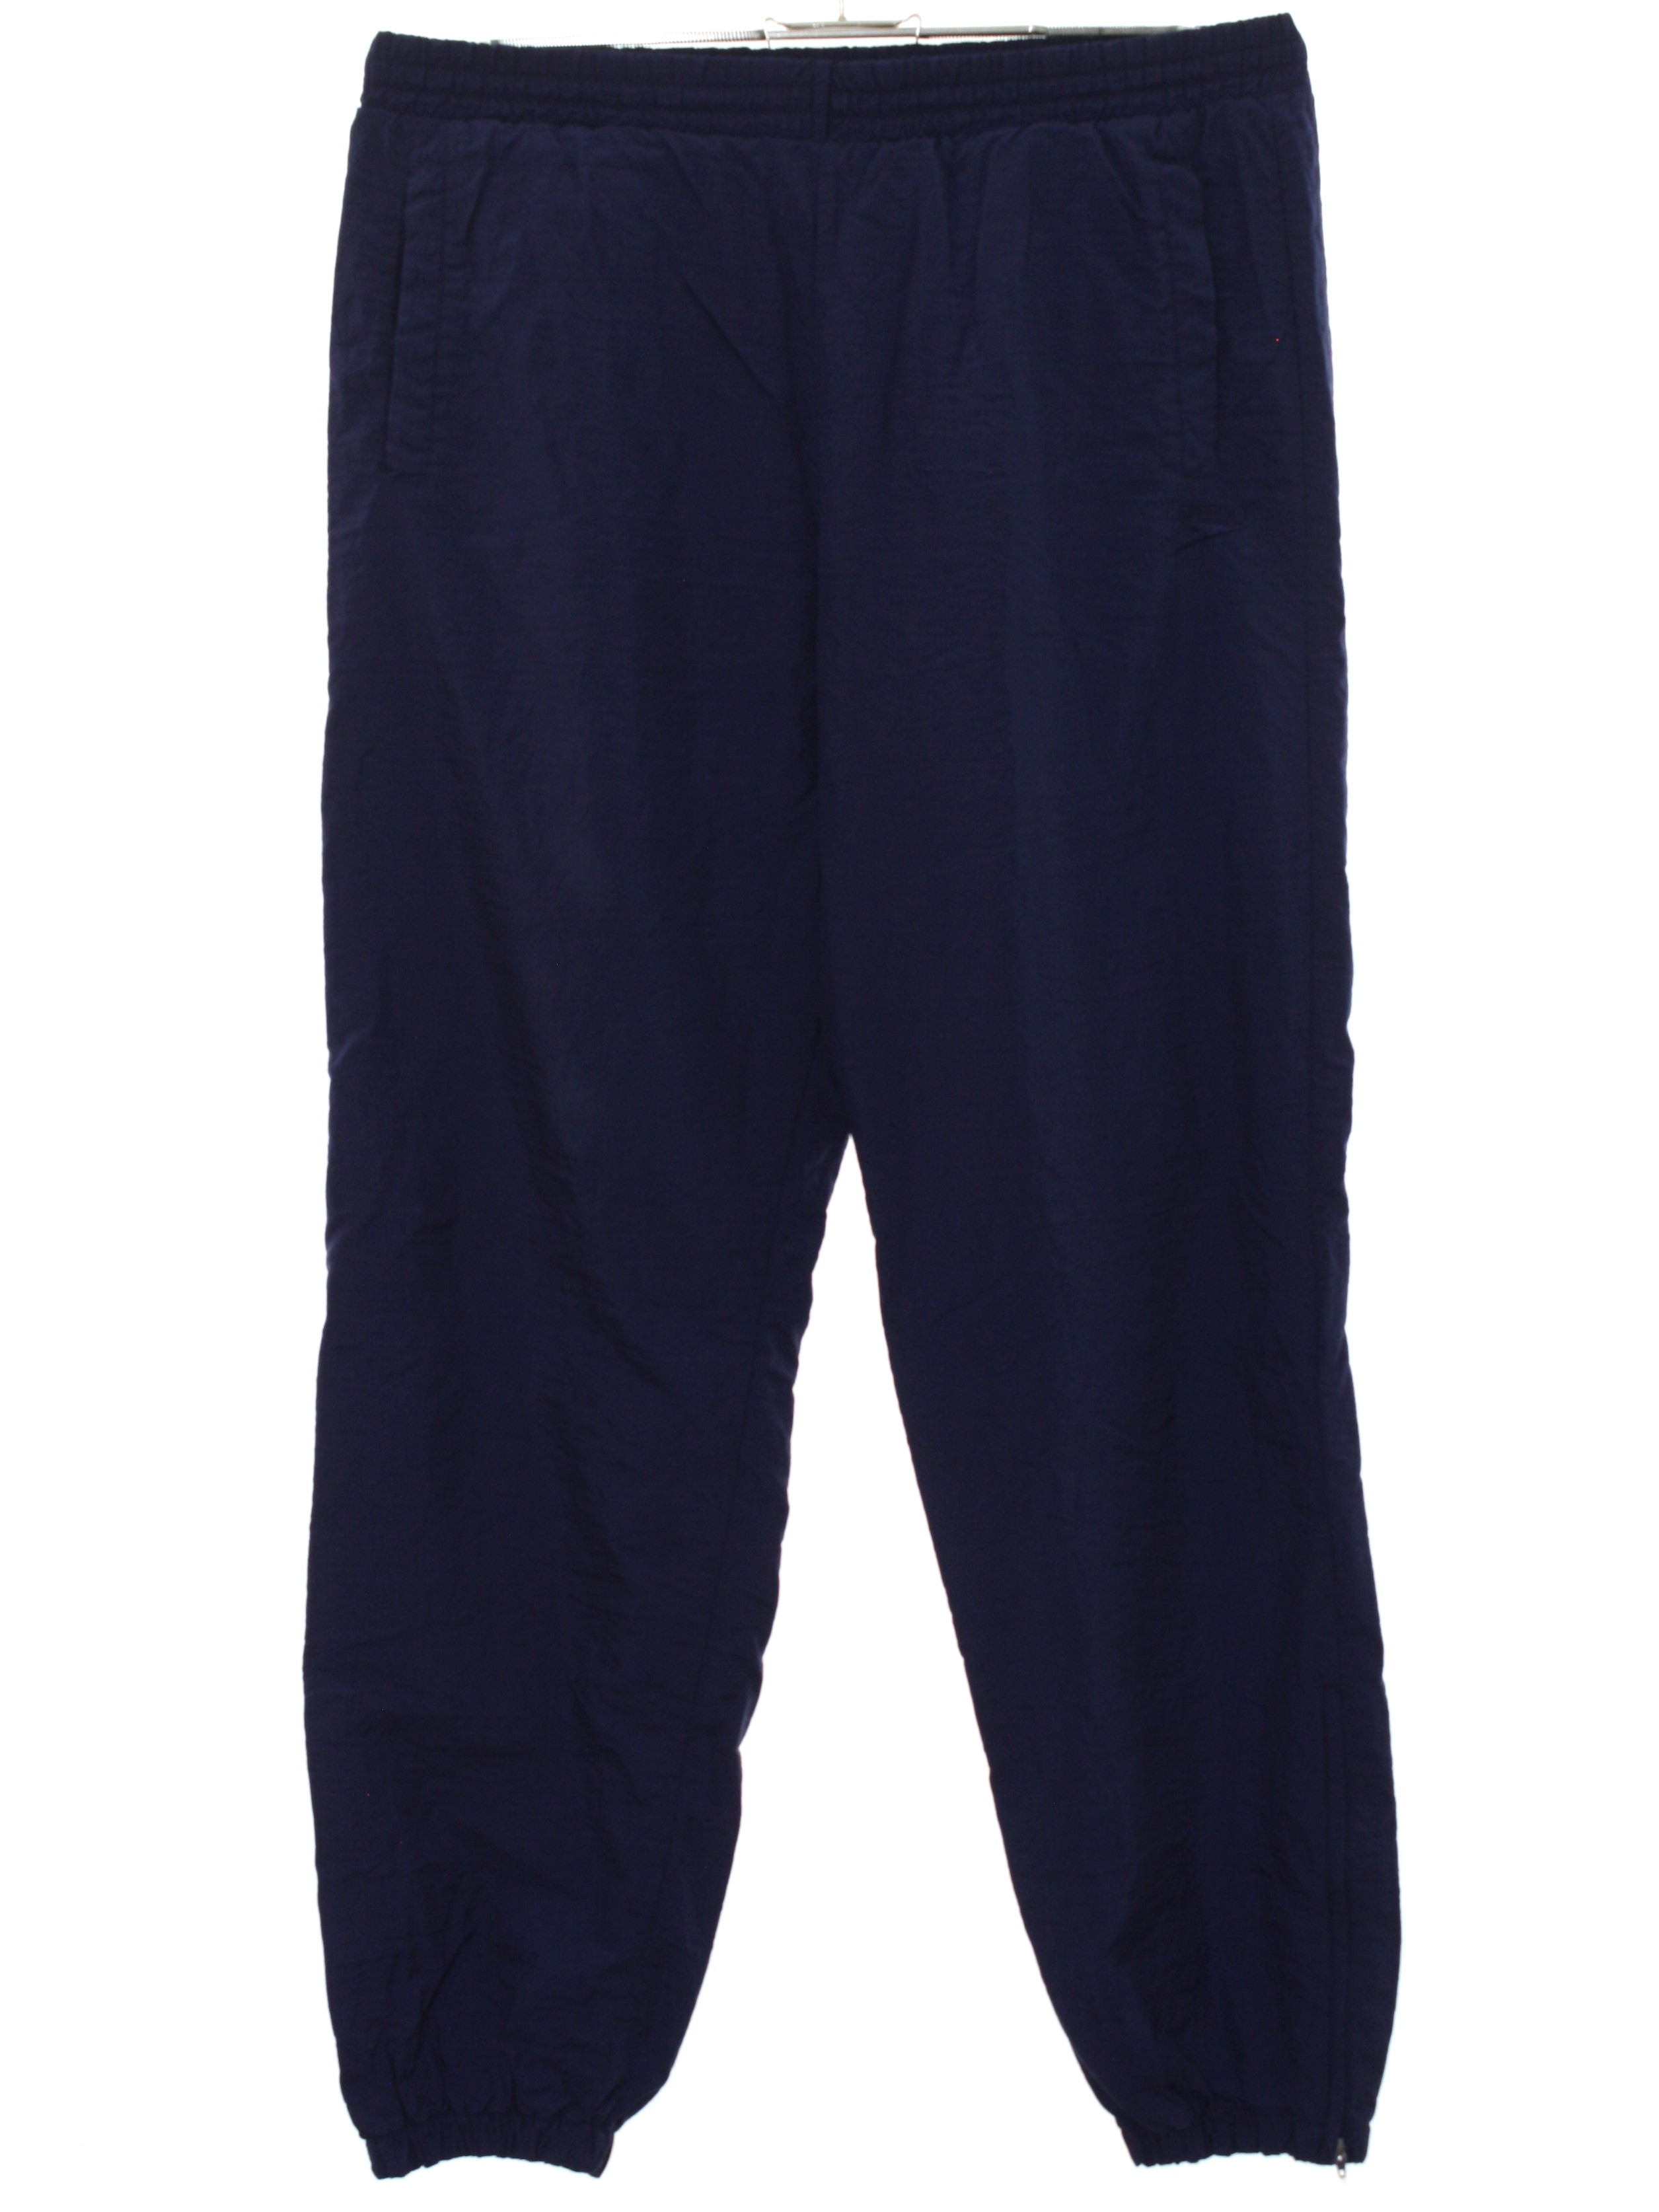 90's Vintage Pants: 90s -Speedo- Mens navy blue nylon track pants ...